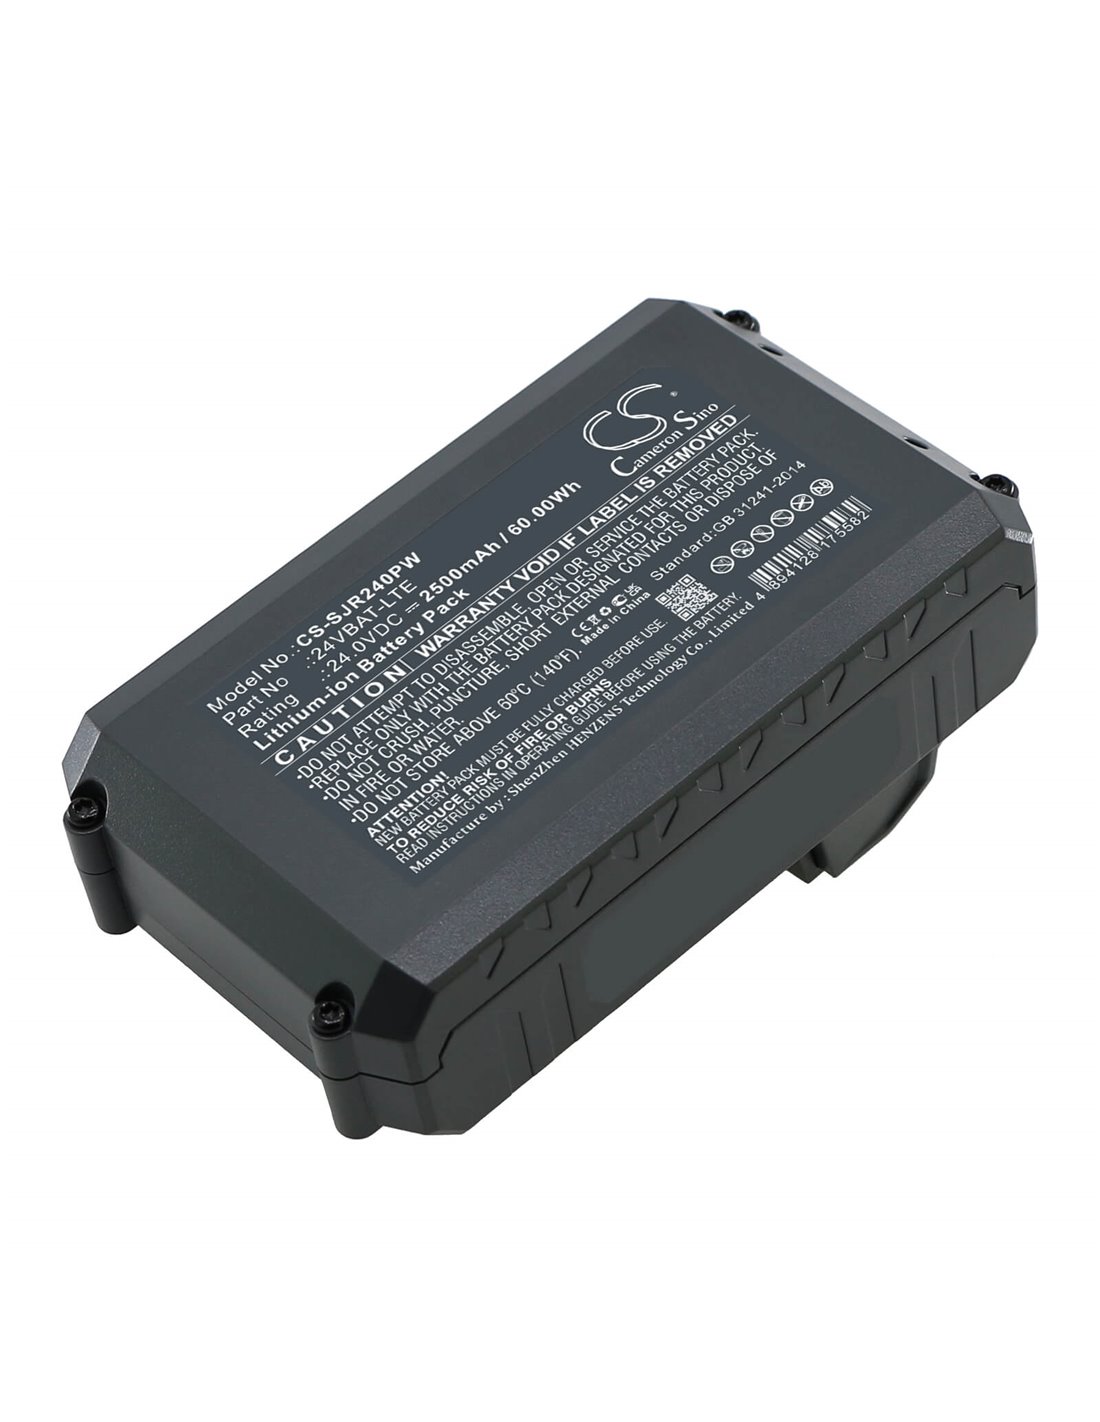 https://www.canadianbatteries.com/291620-thickbox_default/240v-li-ion-2500mah-battery-fits-snow-joe-24v-ajc-lte-24v-jb-lte-6000wh.jpg